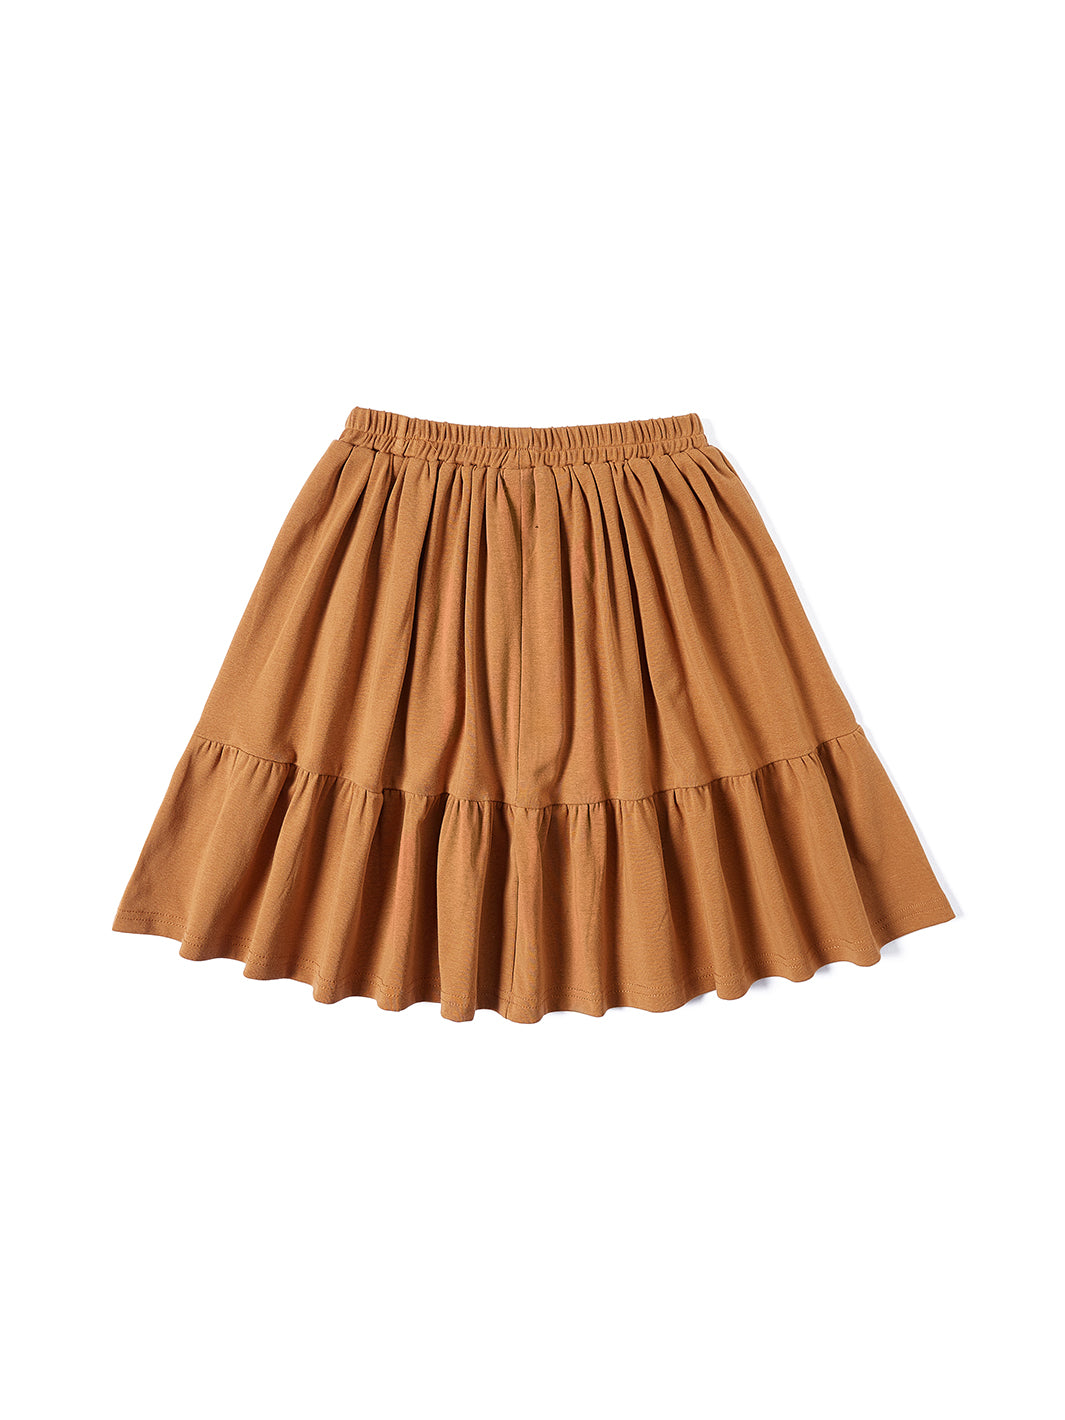 Low Cut Skirt - Camel